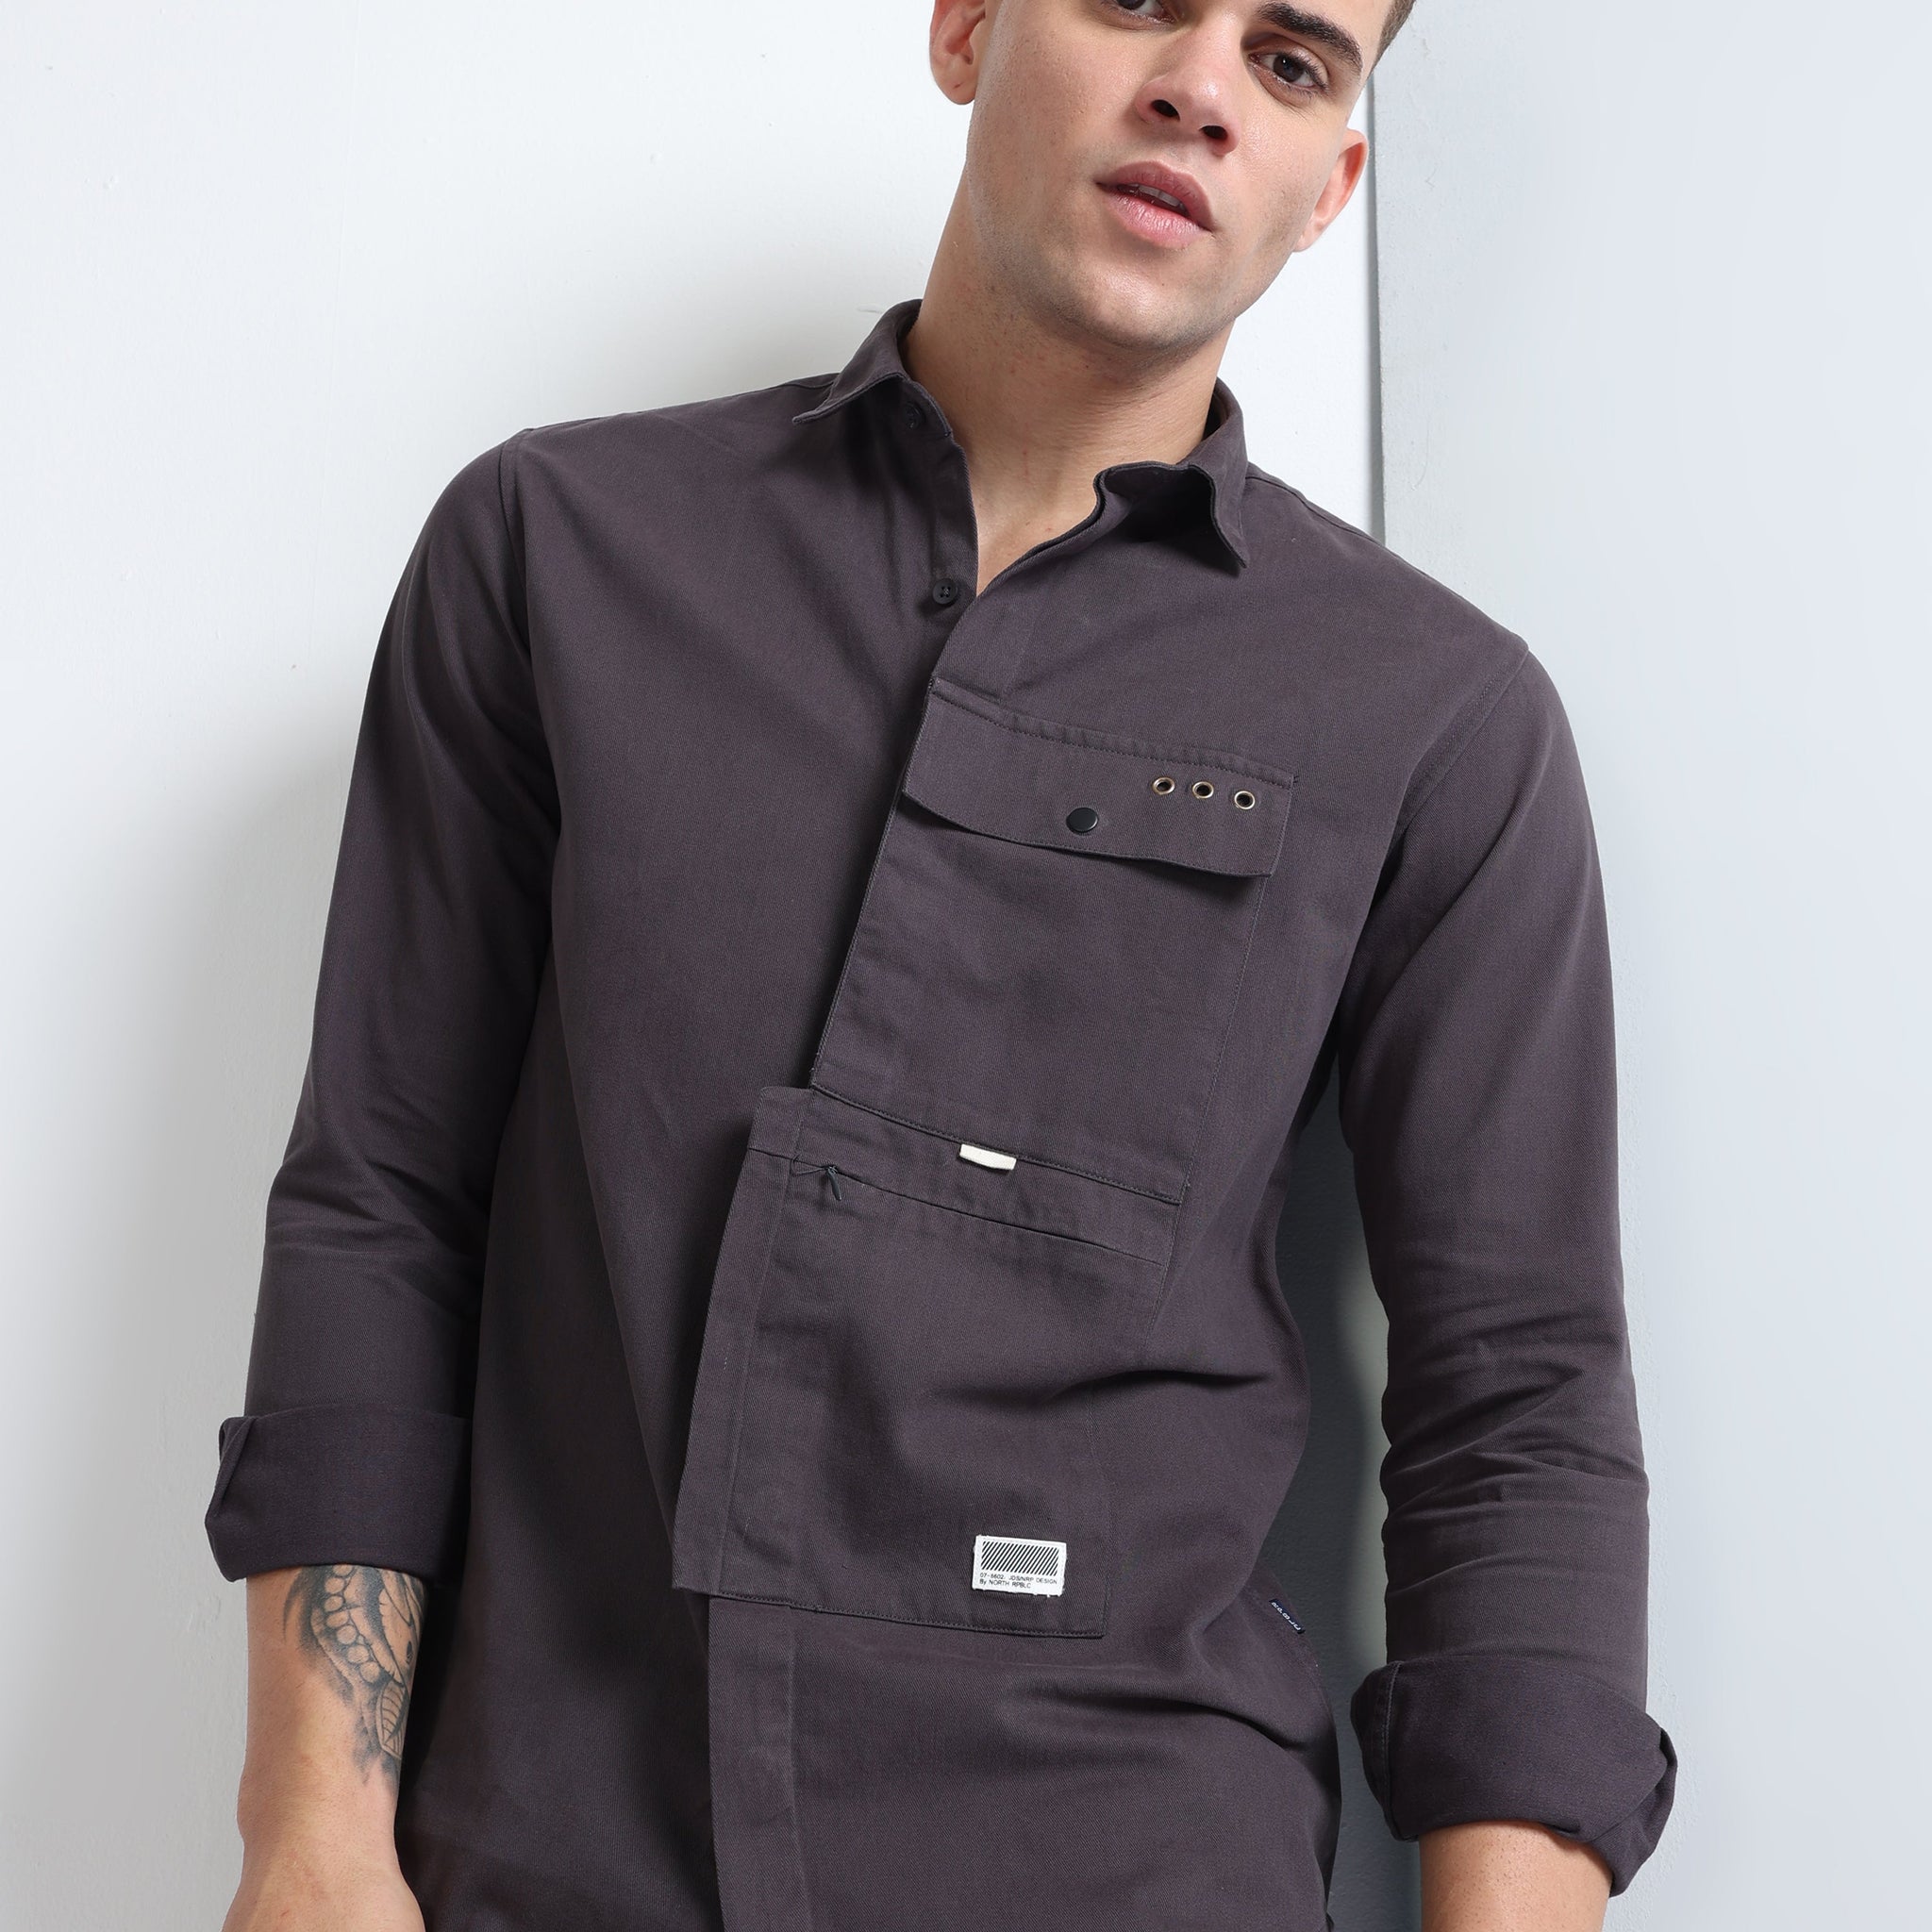 Buy Tacal Cargo Pocket Work Mens Stylish Shirt Online.